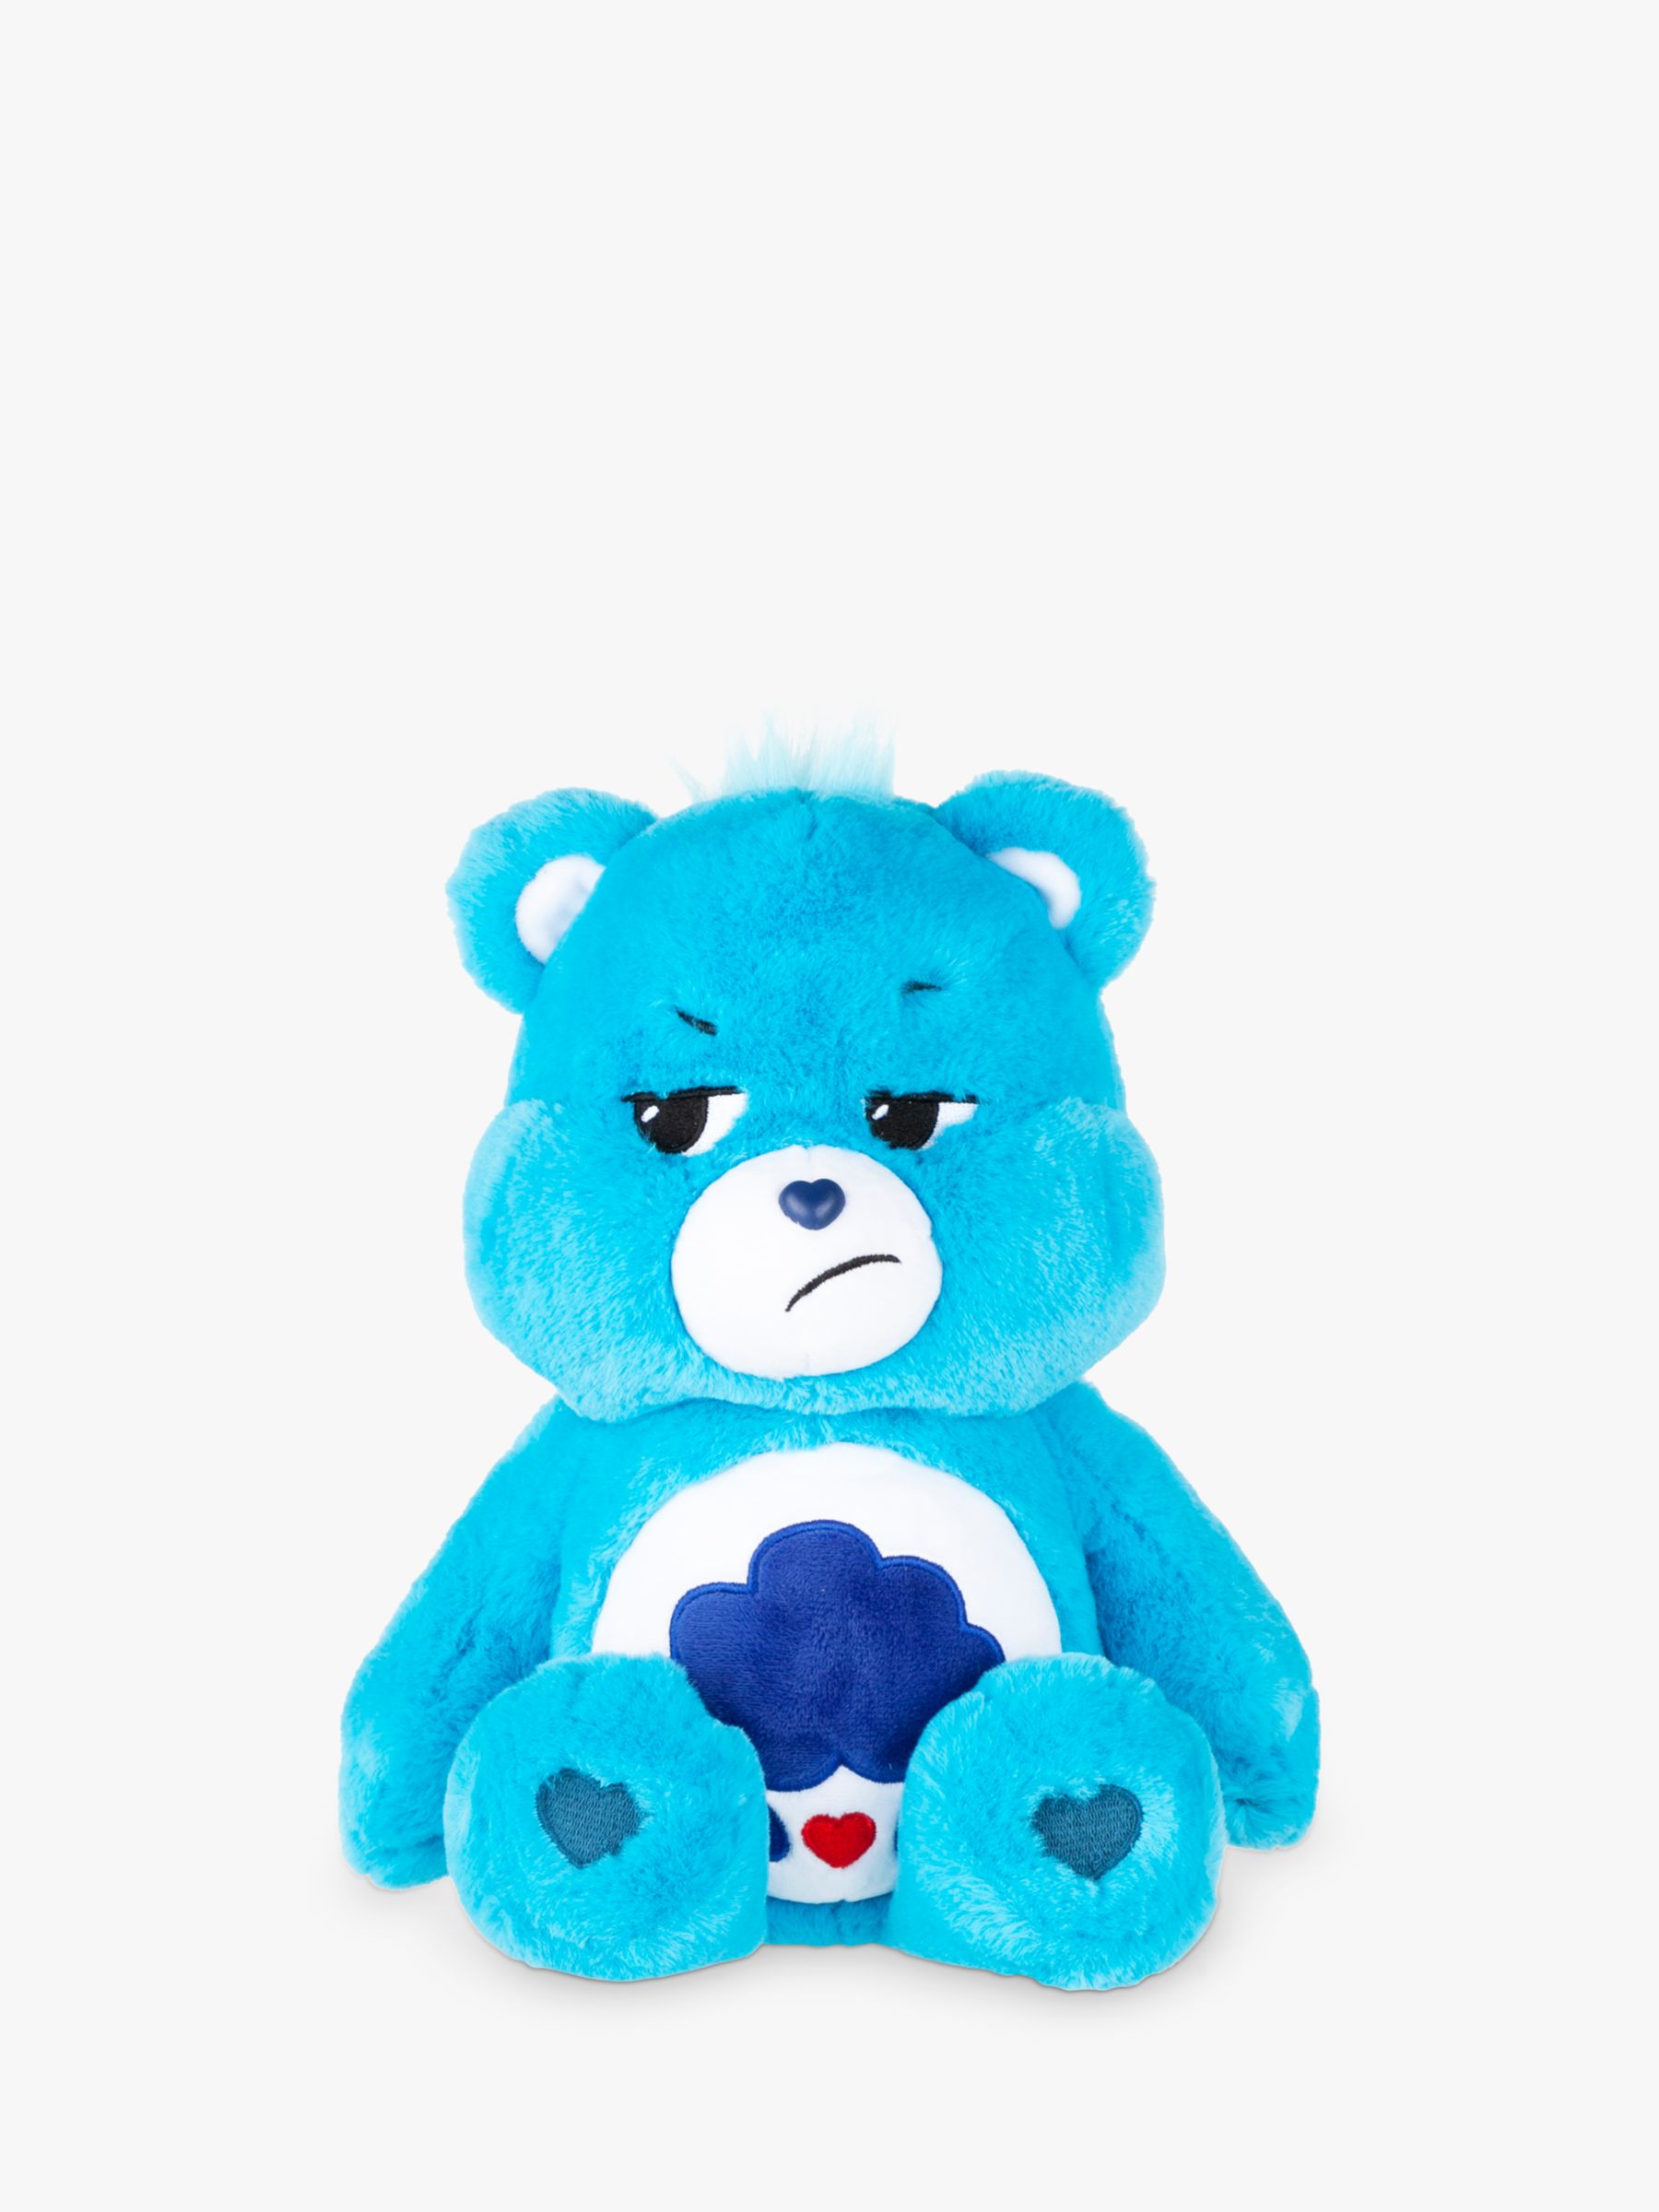 care bear grumpy